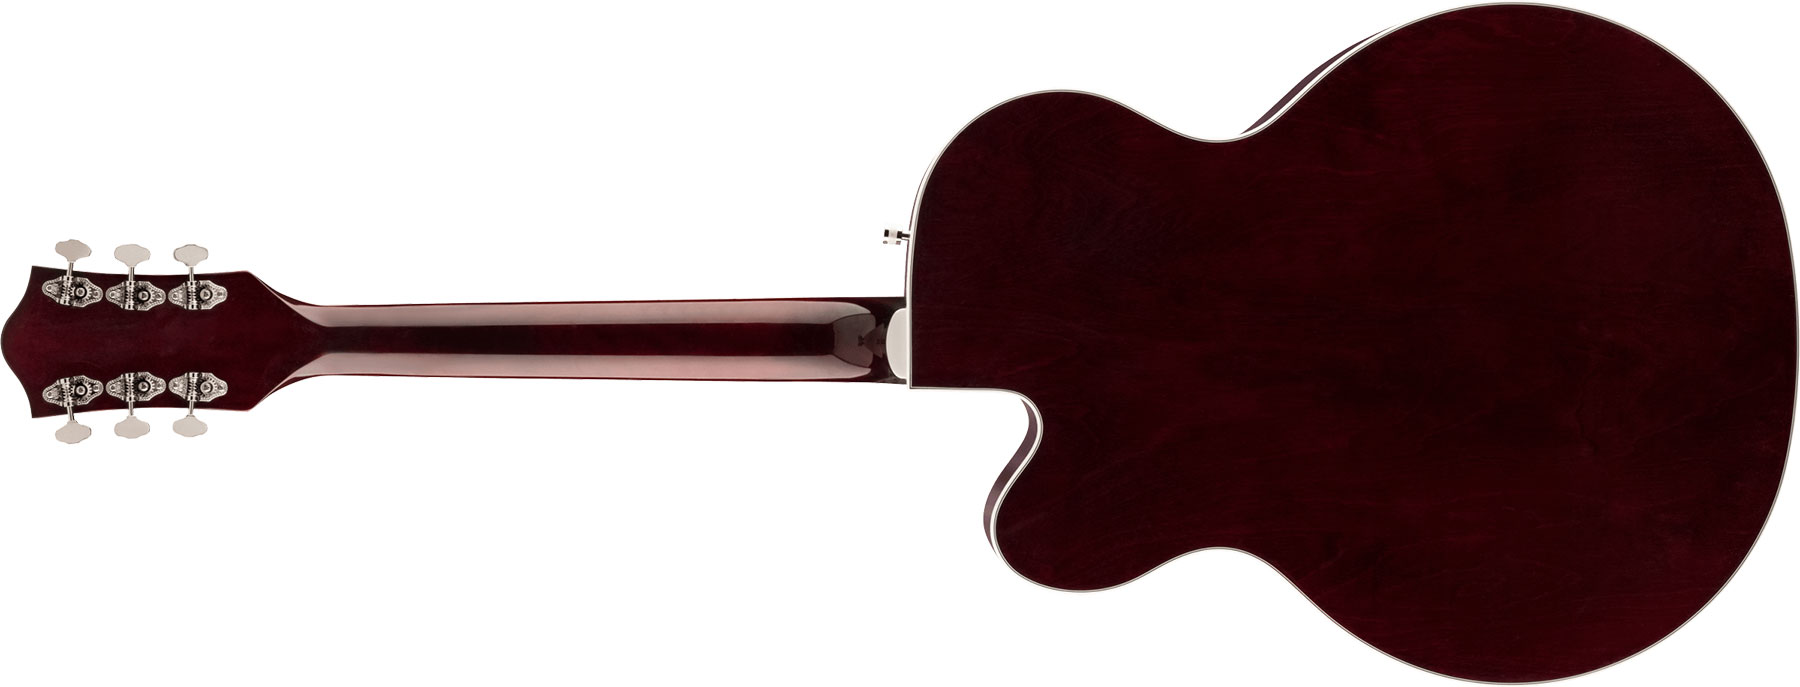 Gretsch G5420t Classic Bigsby Electromatic Hollow Body 2h Trem Lau - Walnut Stain - Semi-Hollow E-Gitarre - Variation 1